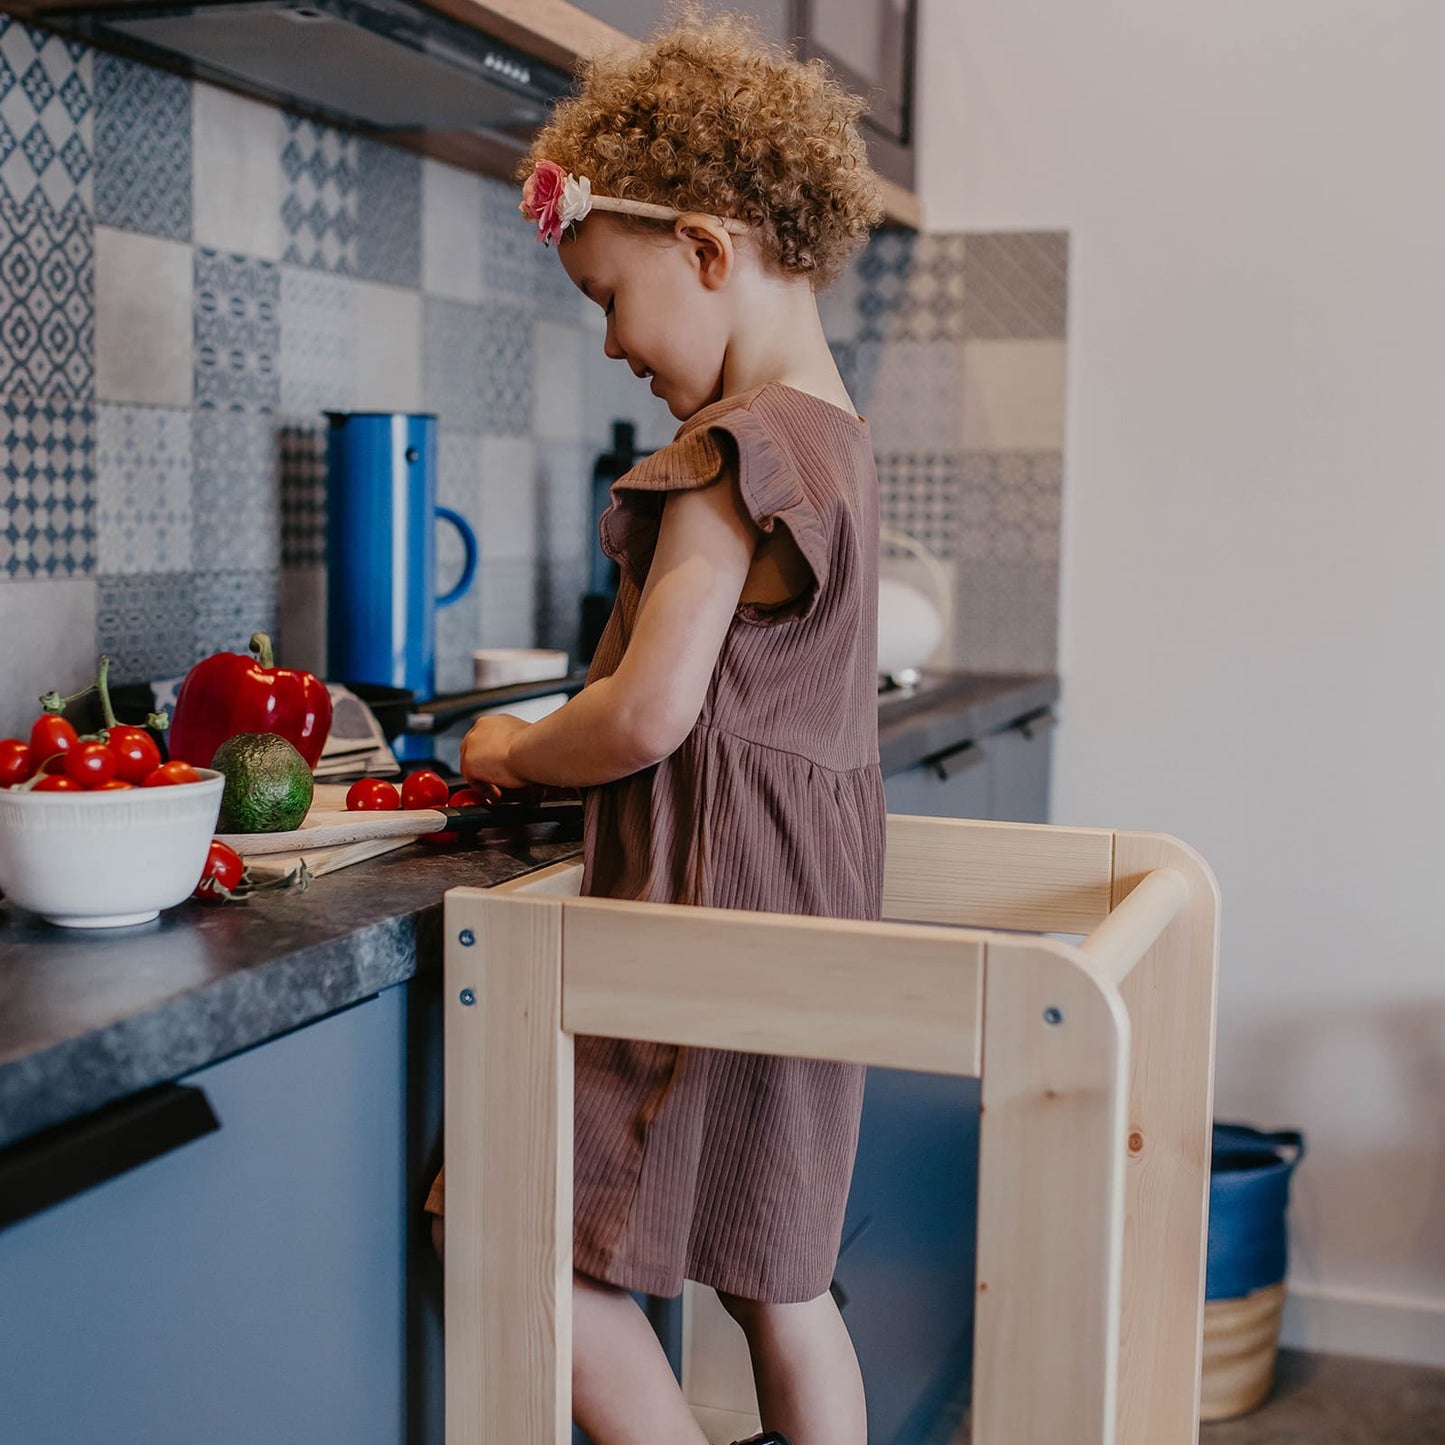 MeowBaby® Kitchen Helper Drewniany Pomocnik Kuchenny dla Dziecka, Naturalne Drewno